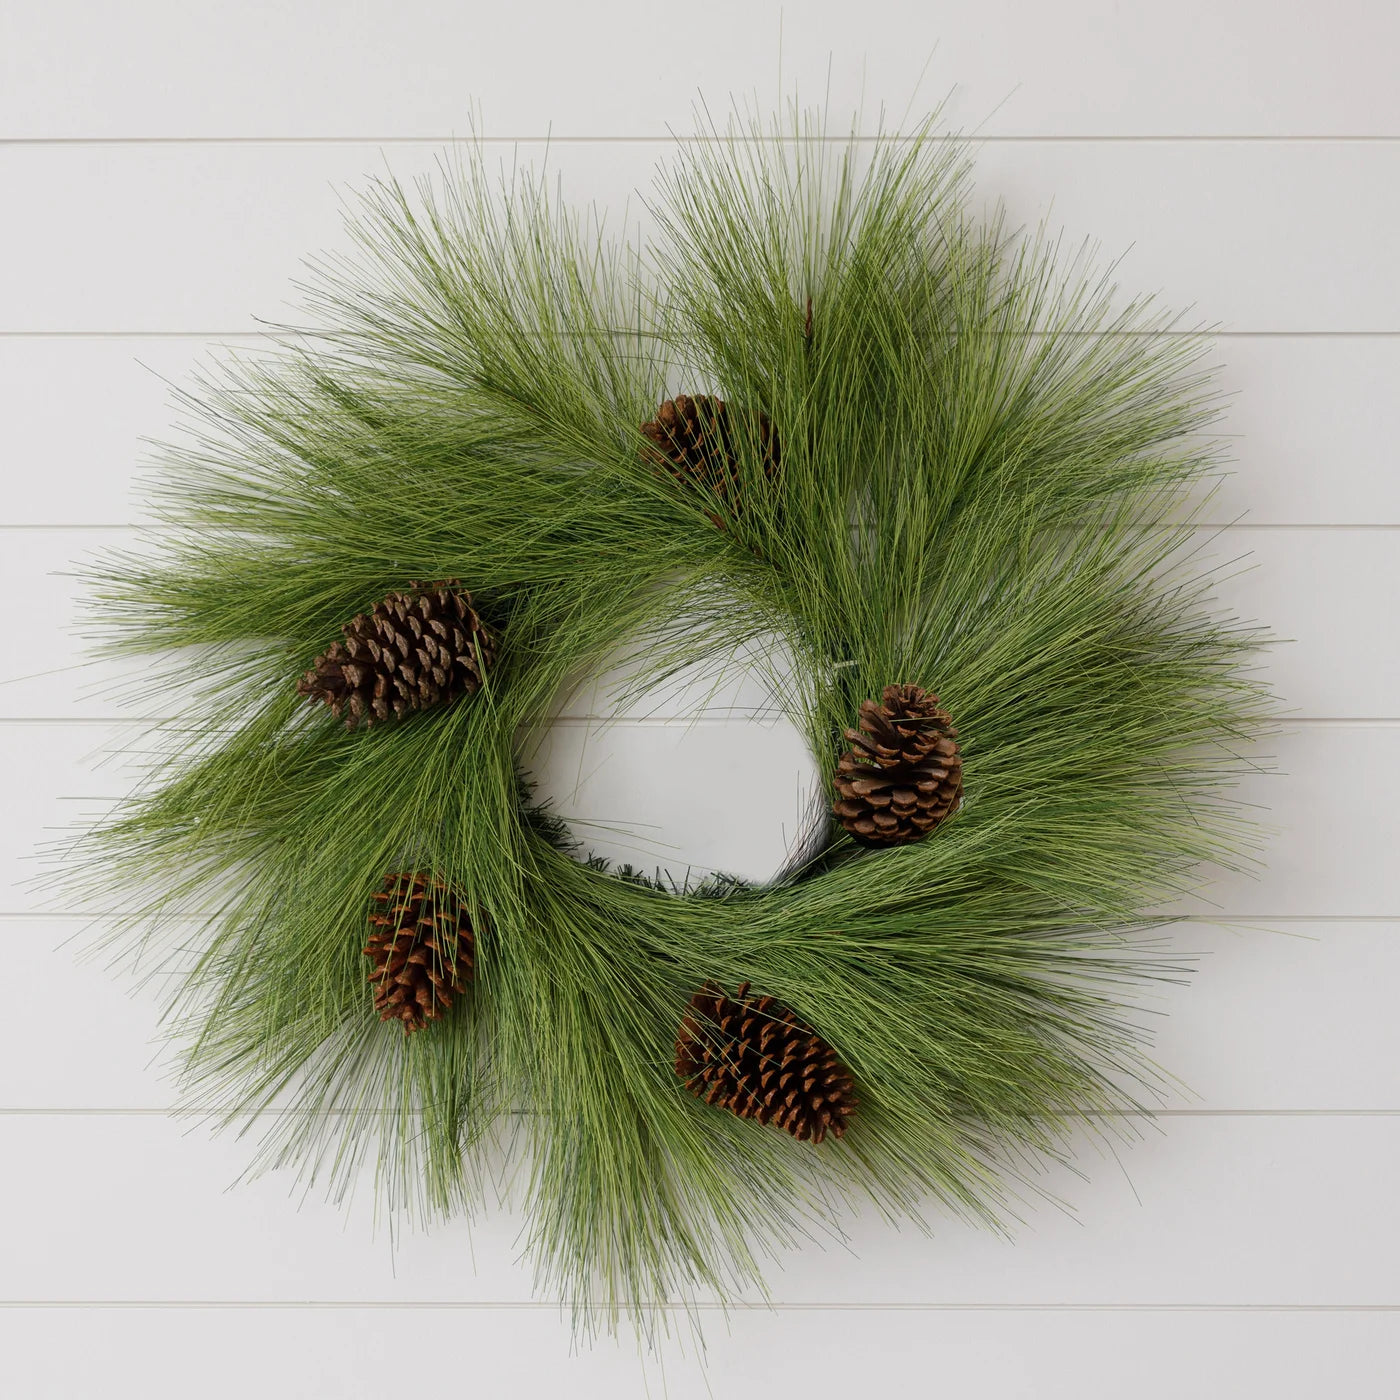 Wreath - White Pine And Pine Cones